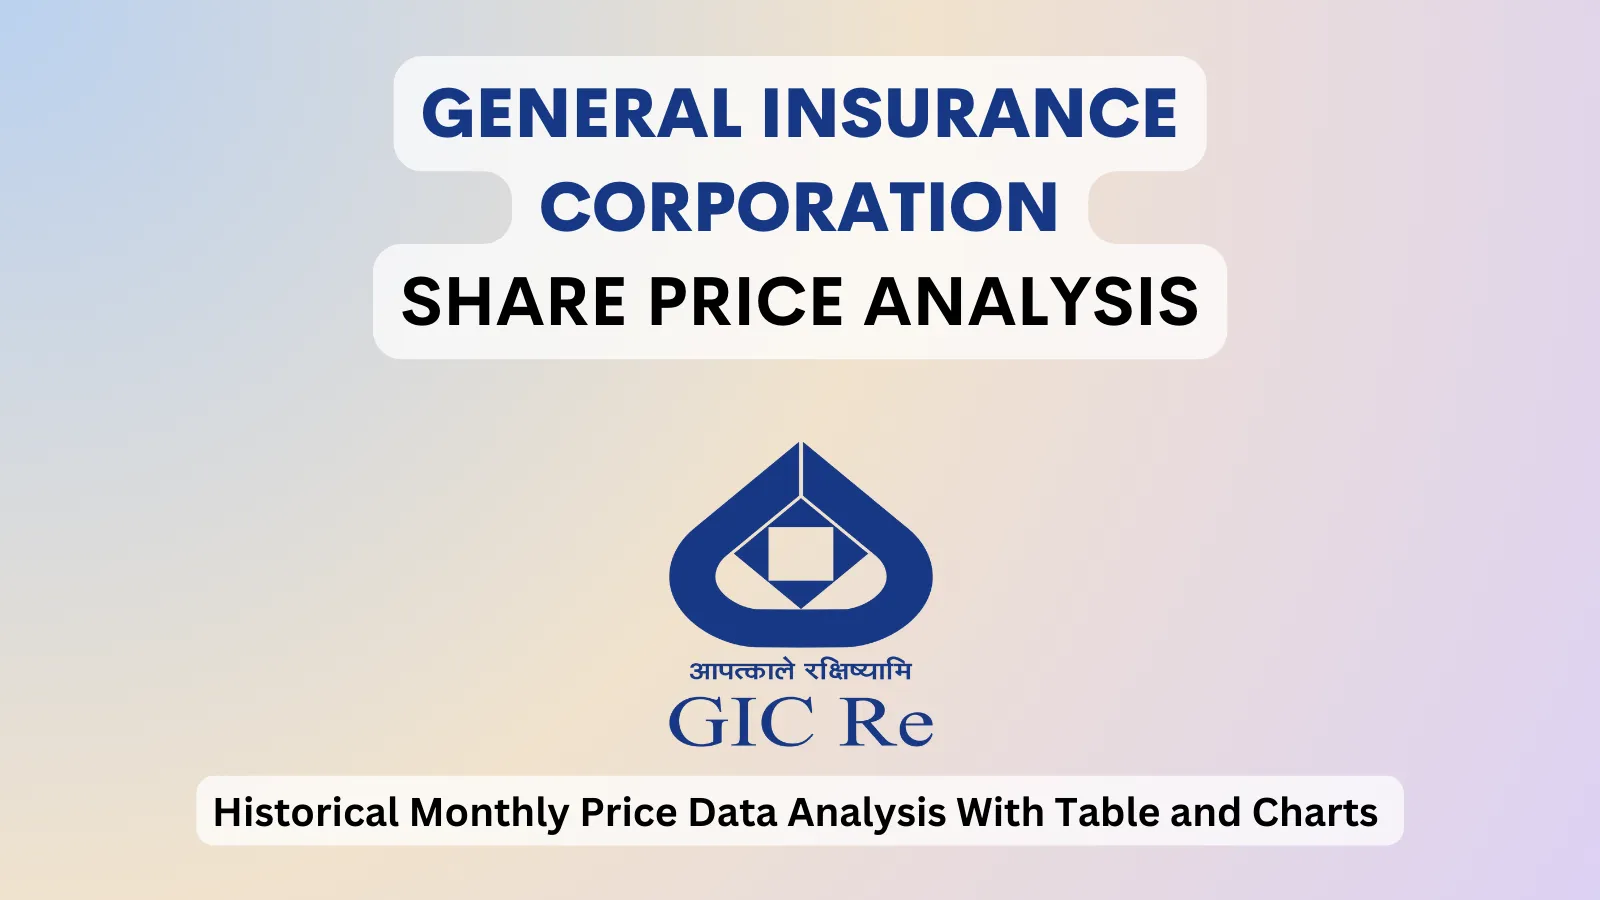 General Insurance Corp share price analysis